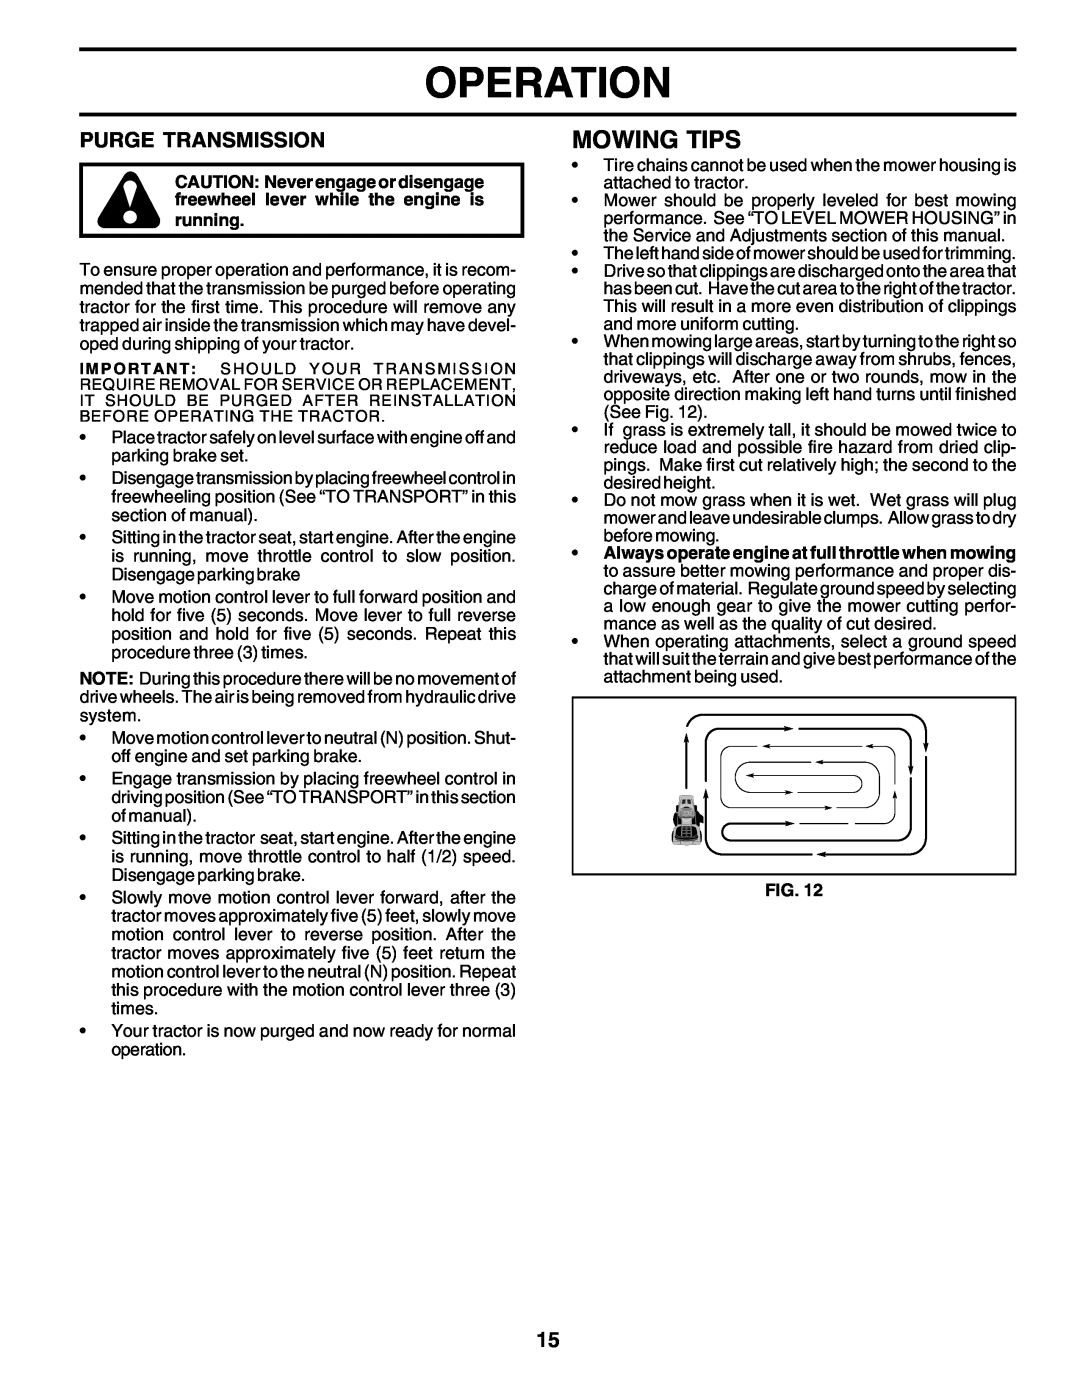 Poulan PRGT22H50B owner manual Mowing Tips, Operation, Purge Transmission 